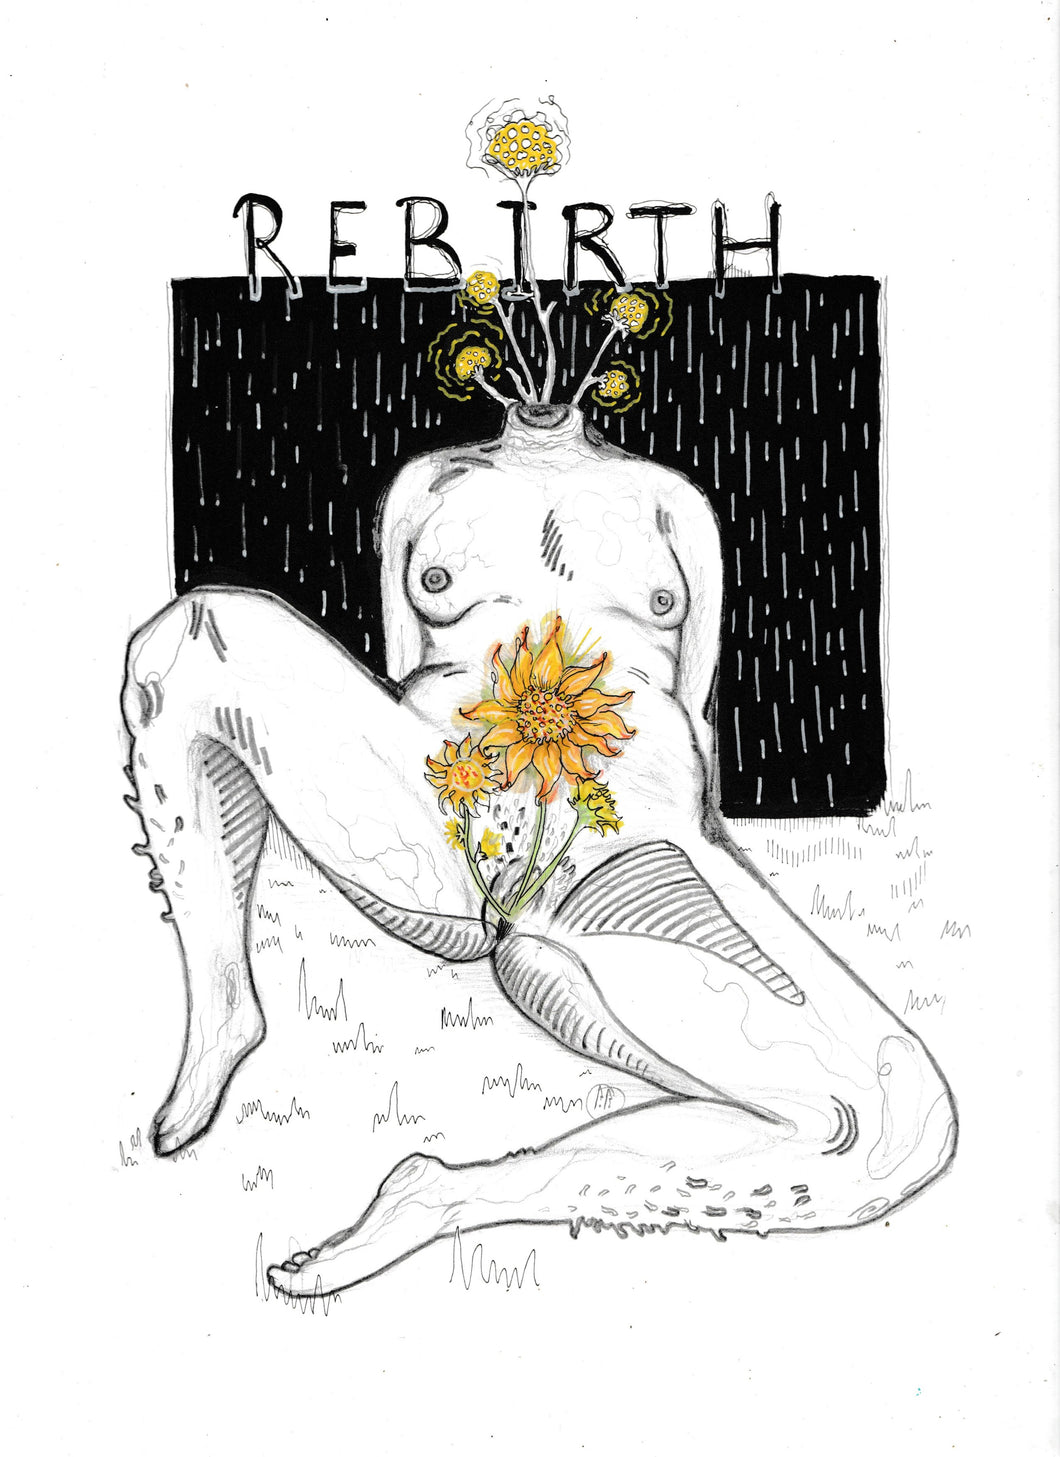 Rebirth - Alternate reality window - Original artwork